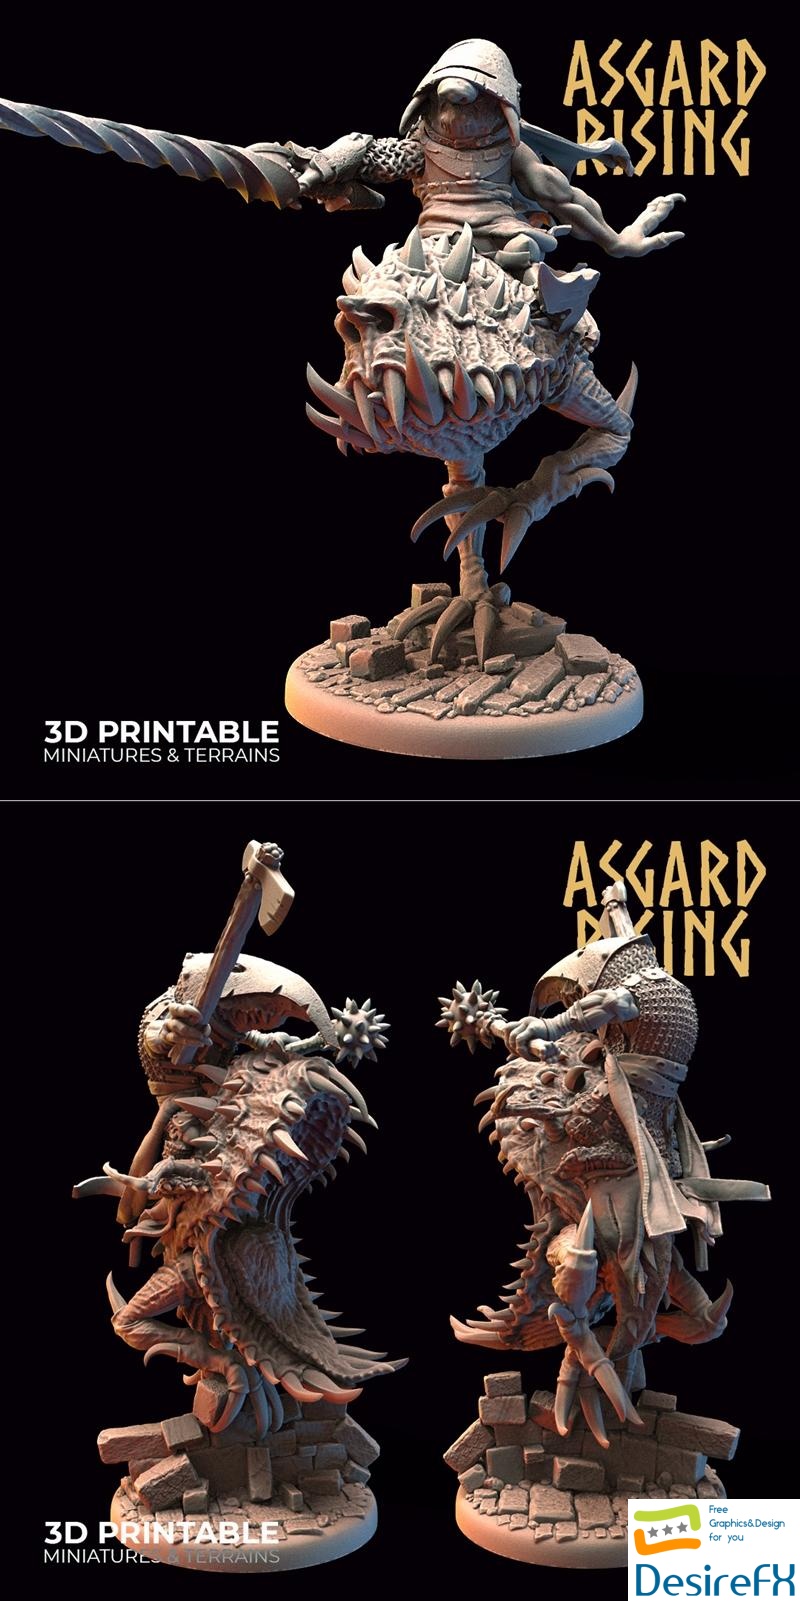 Asgard Rising Miniatures - Goblin Riders on Trollhounds 3D Print